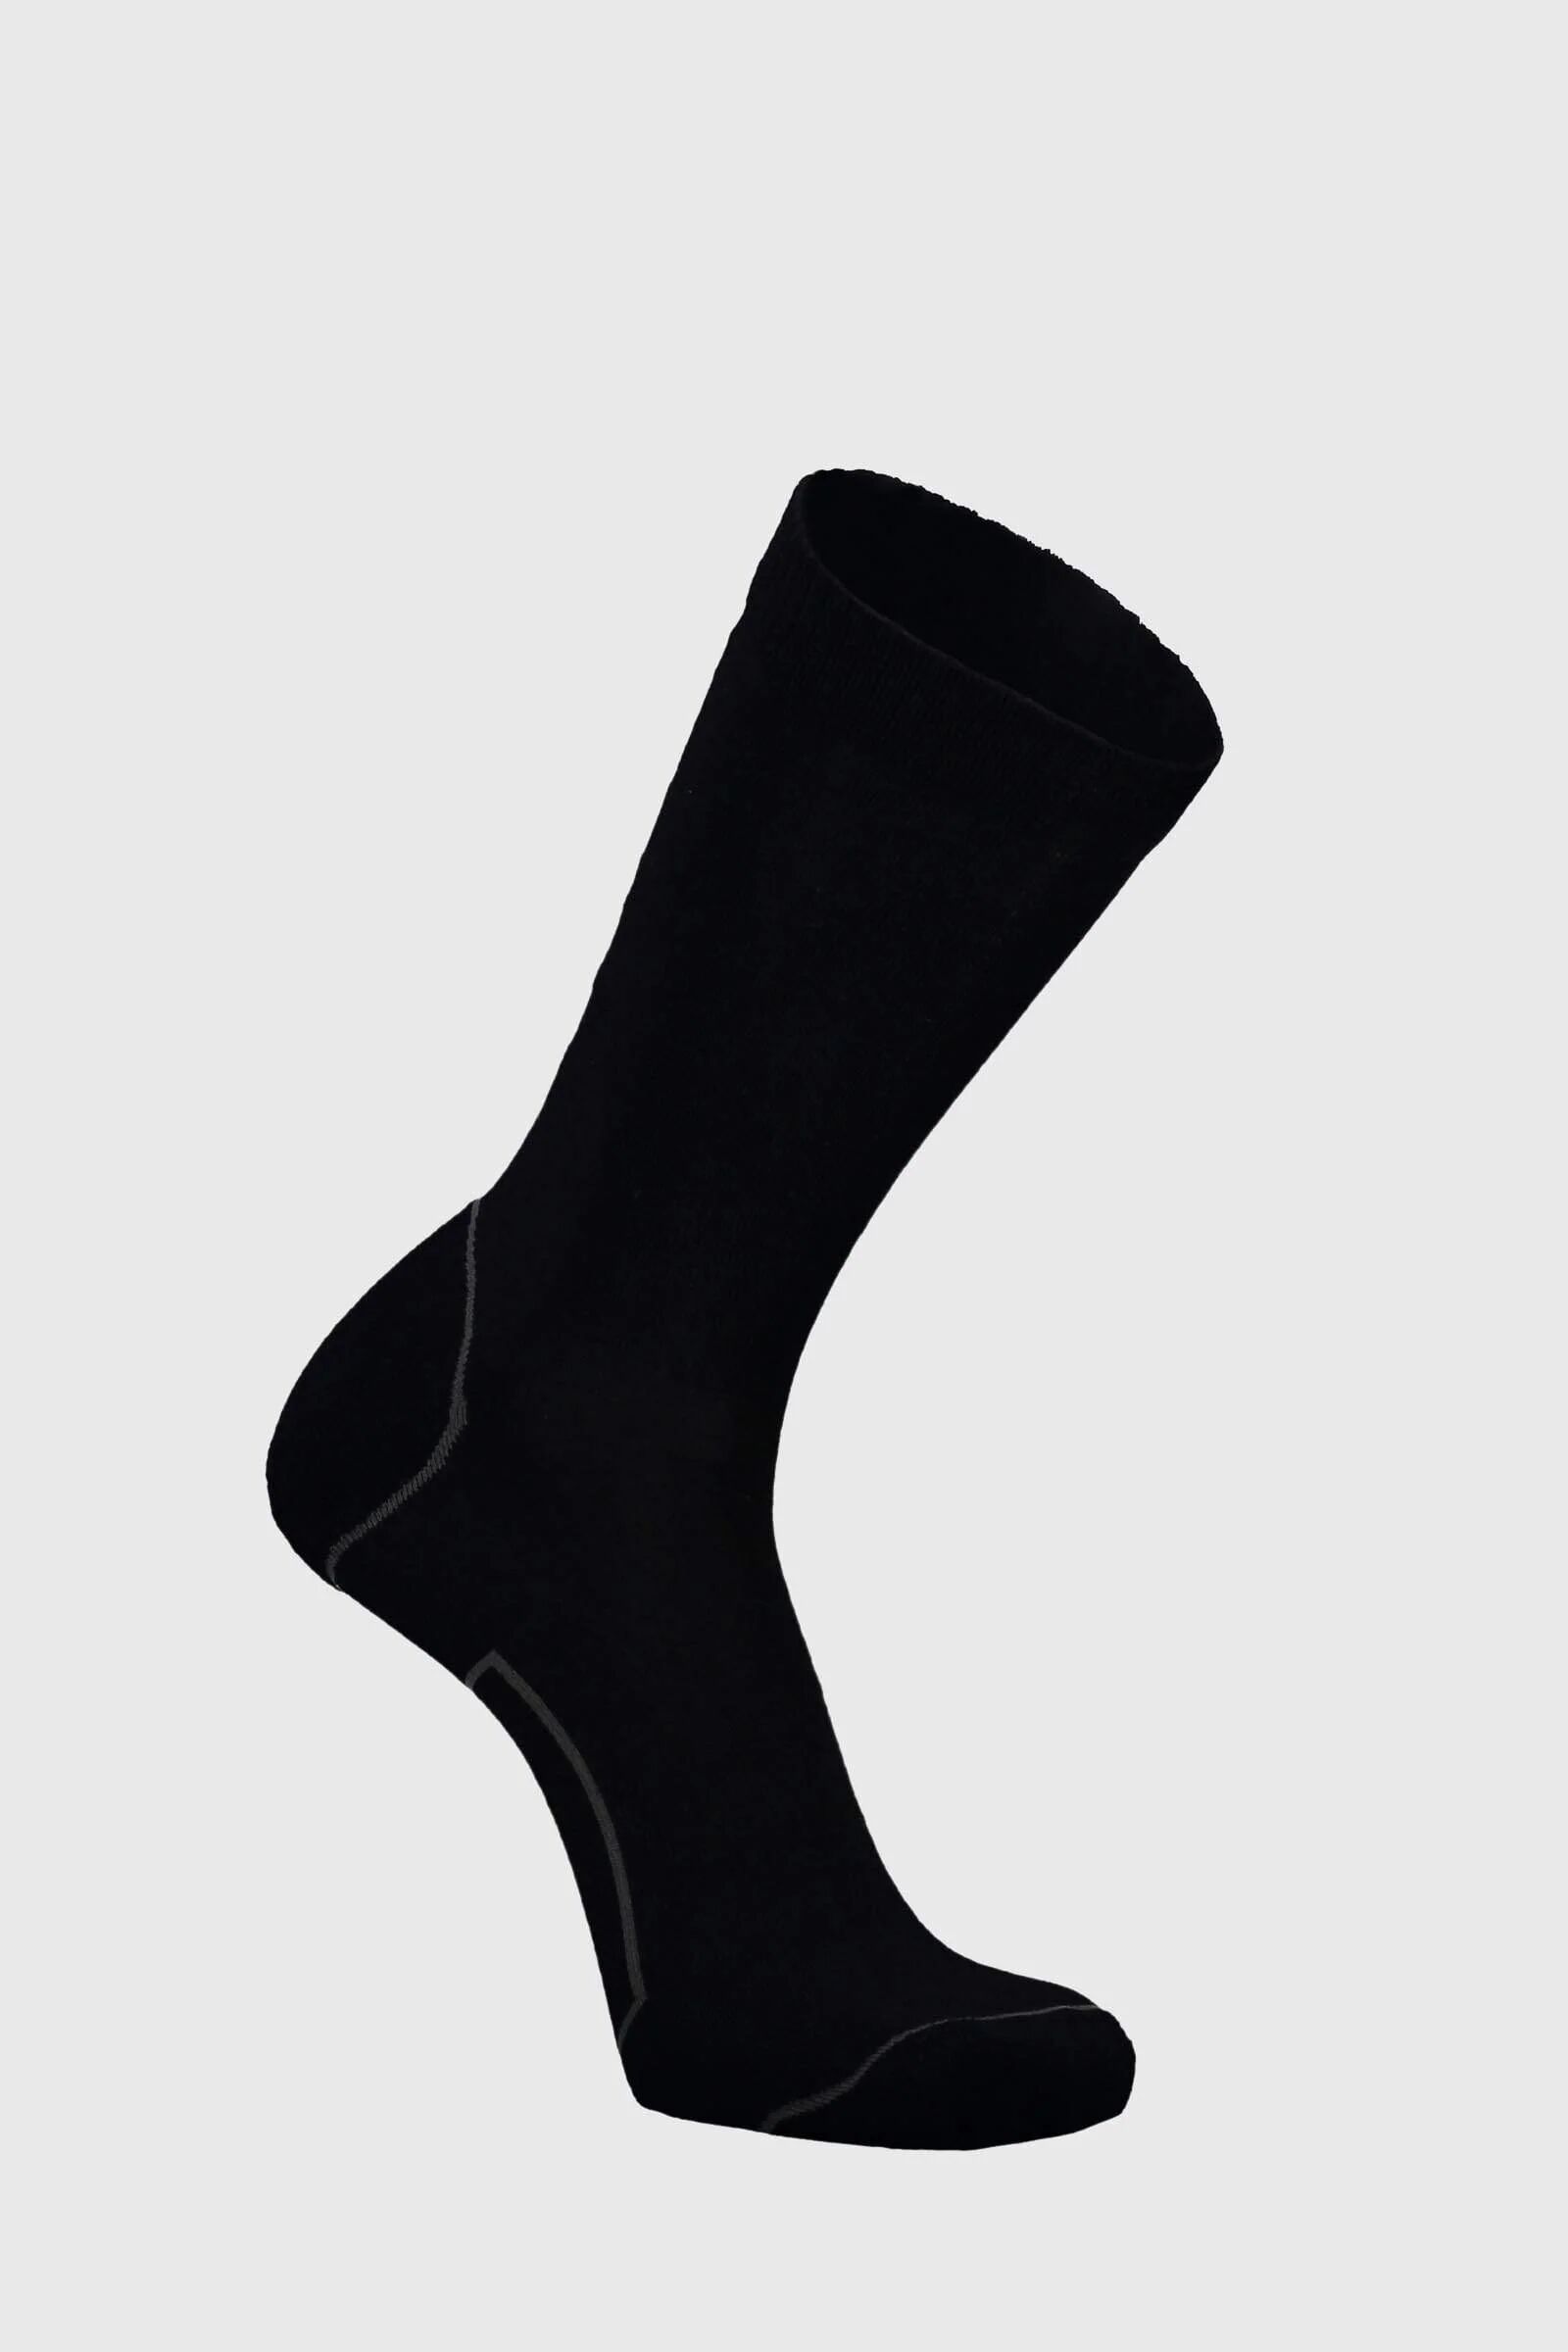 Mons Royale Unisex Tech Bike Sock 2.0 - Merino Wool, Black / 45-47